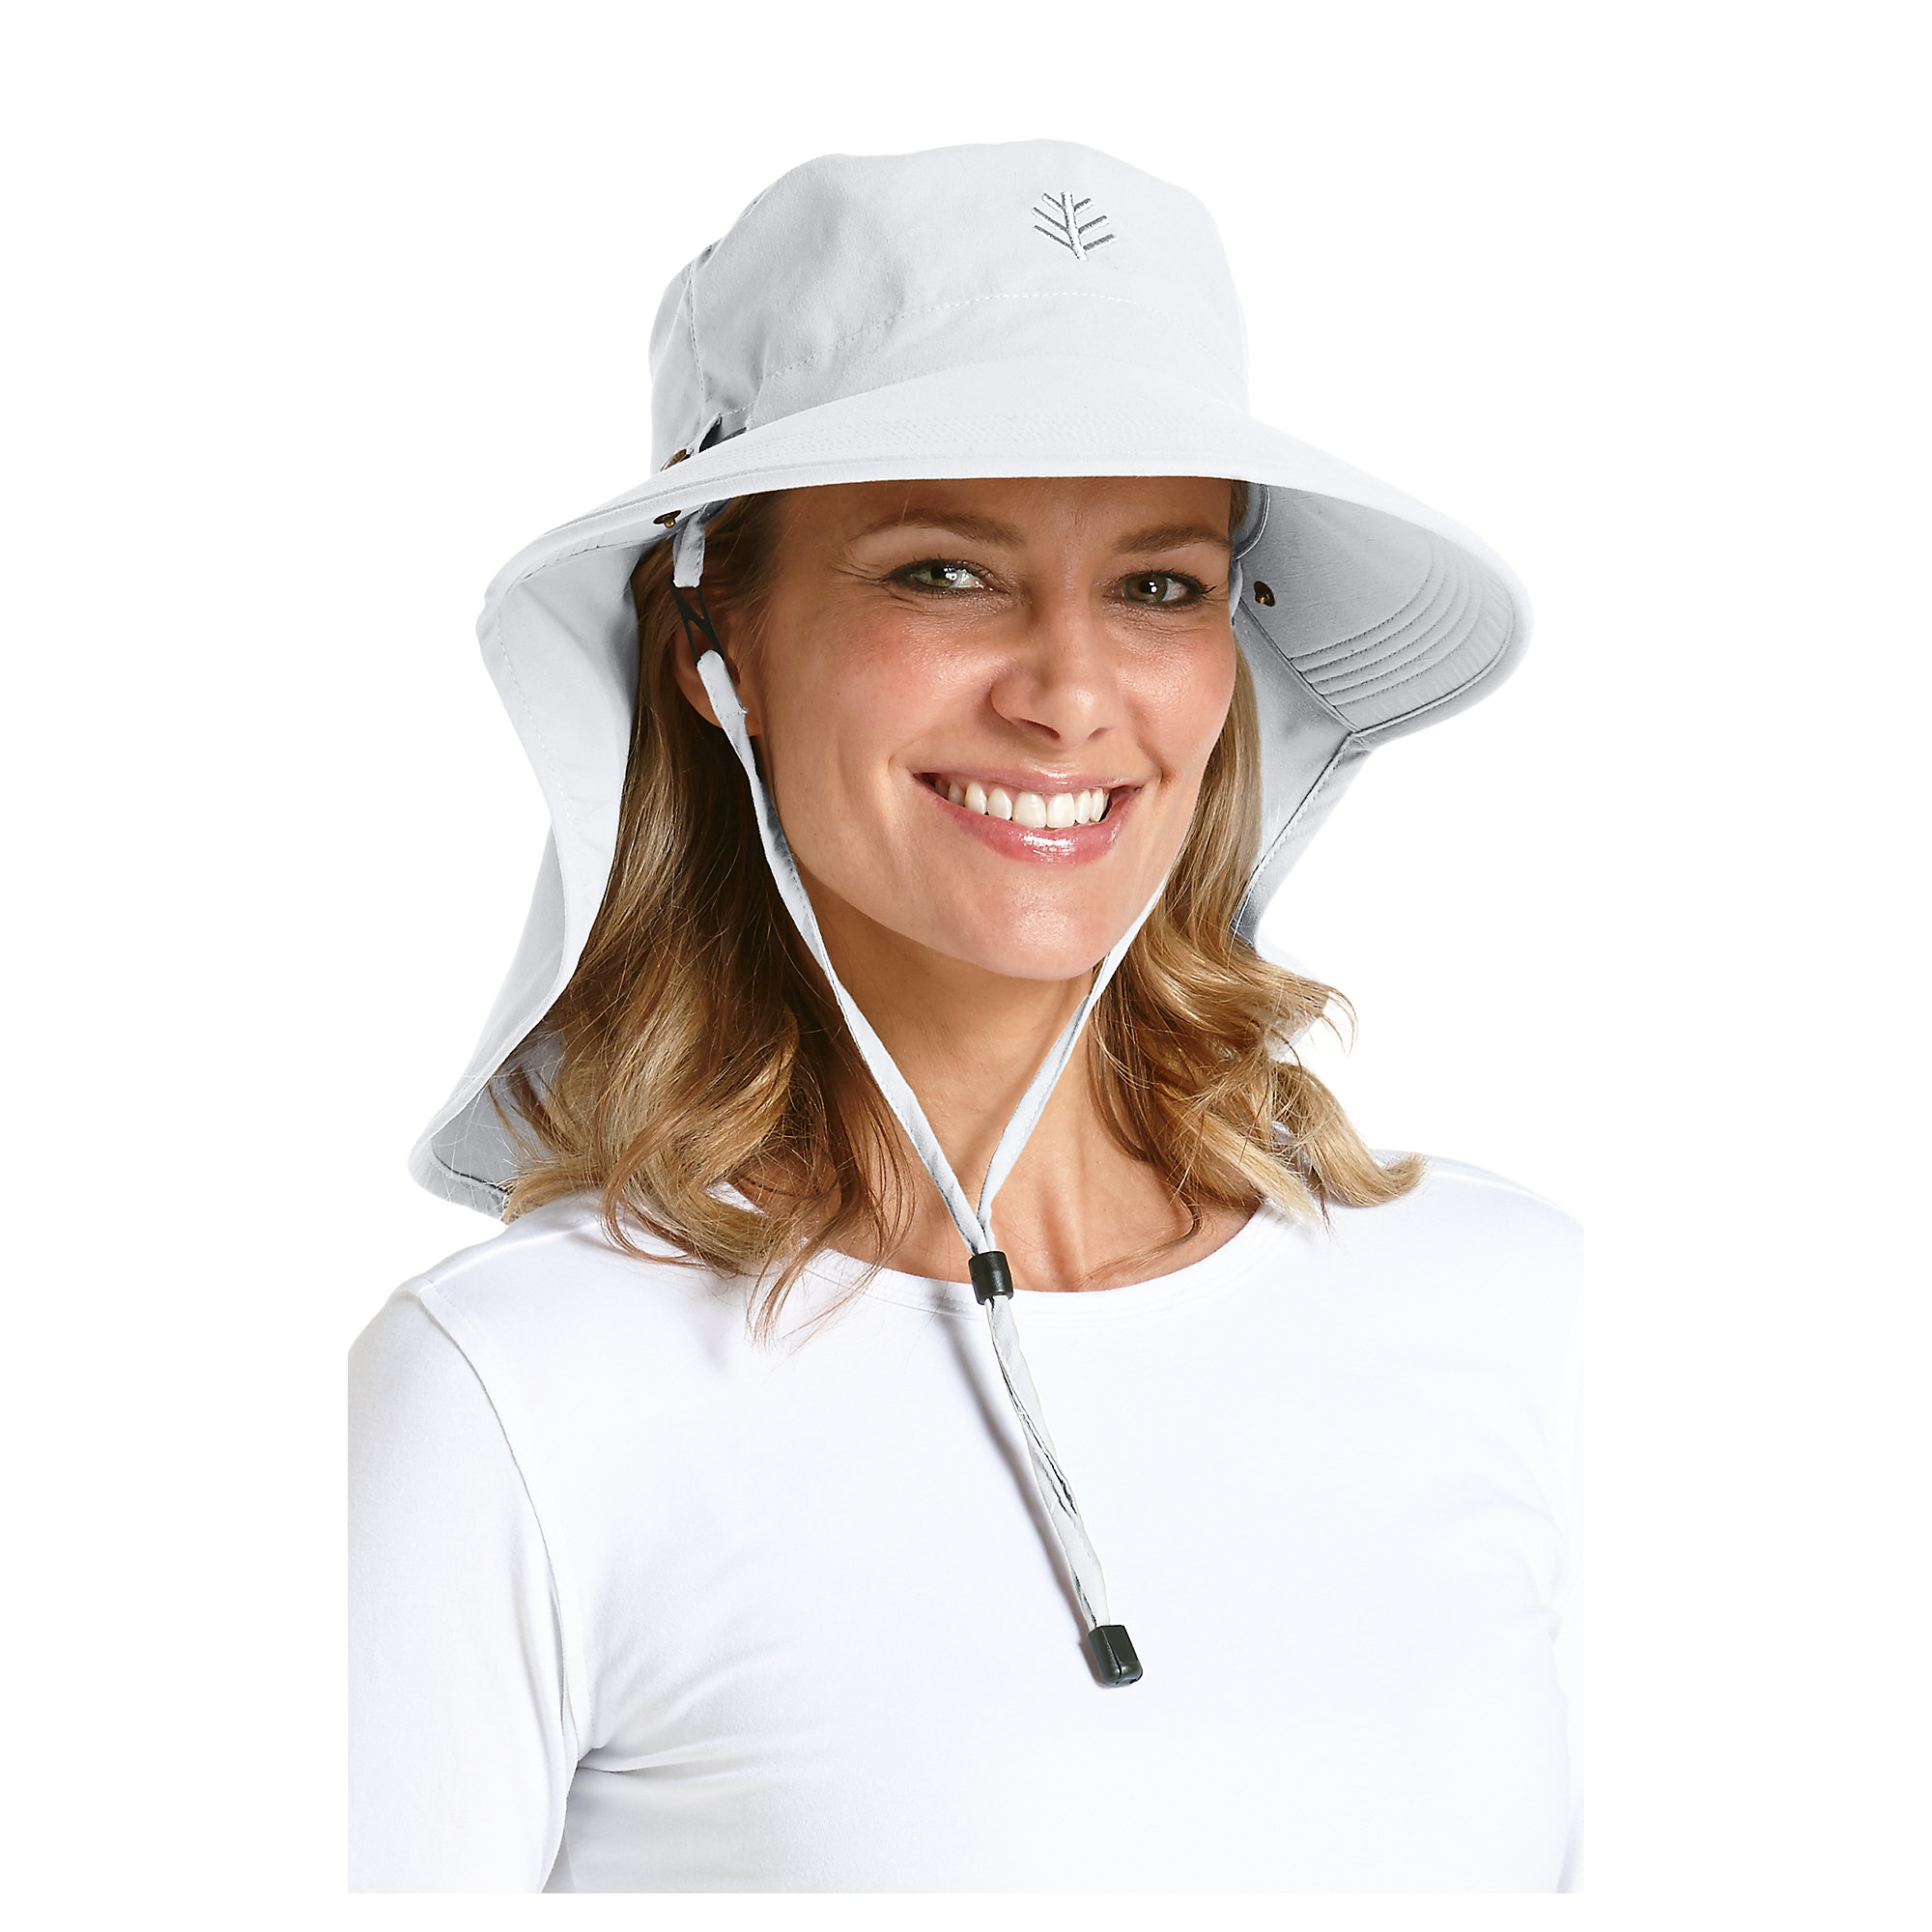 Coolibar UV sun hat for women with neck / face drape in White